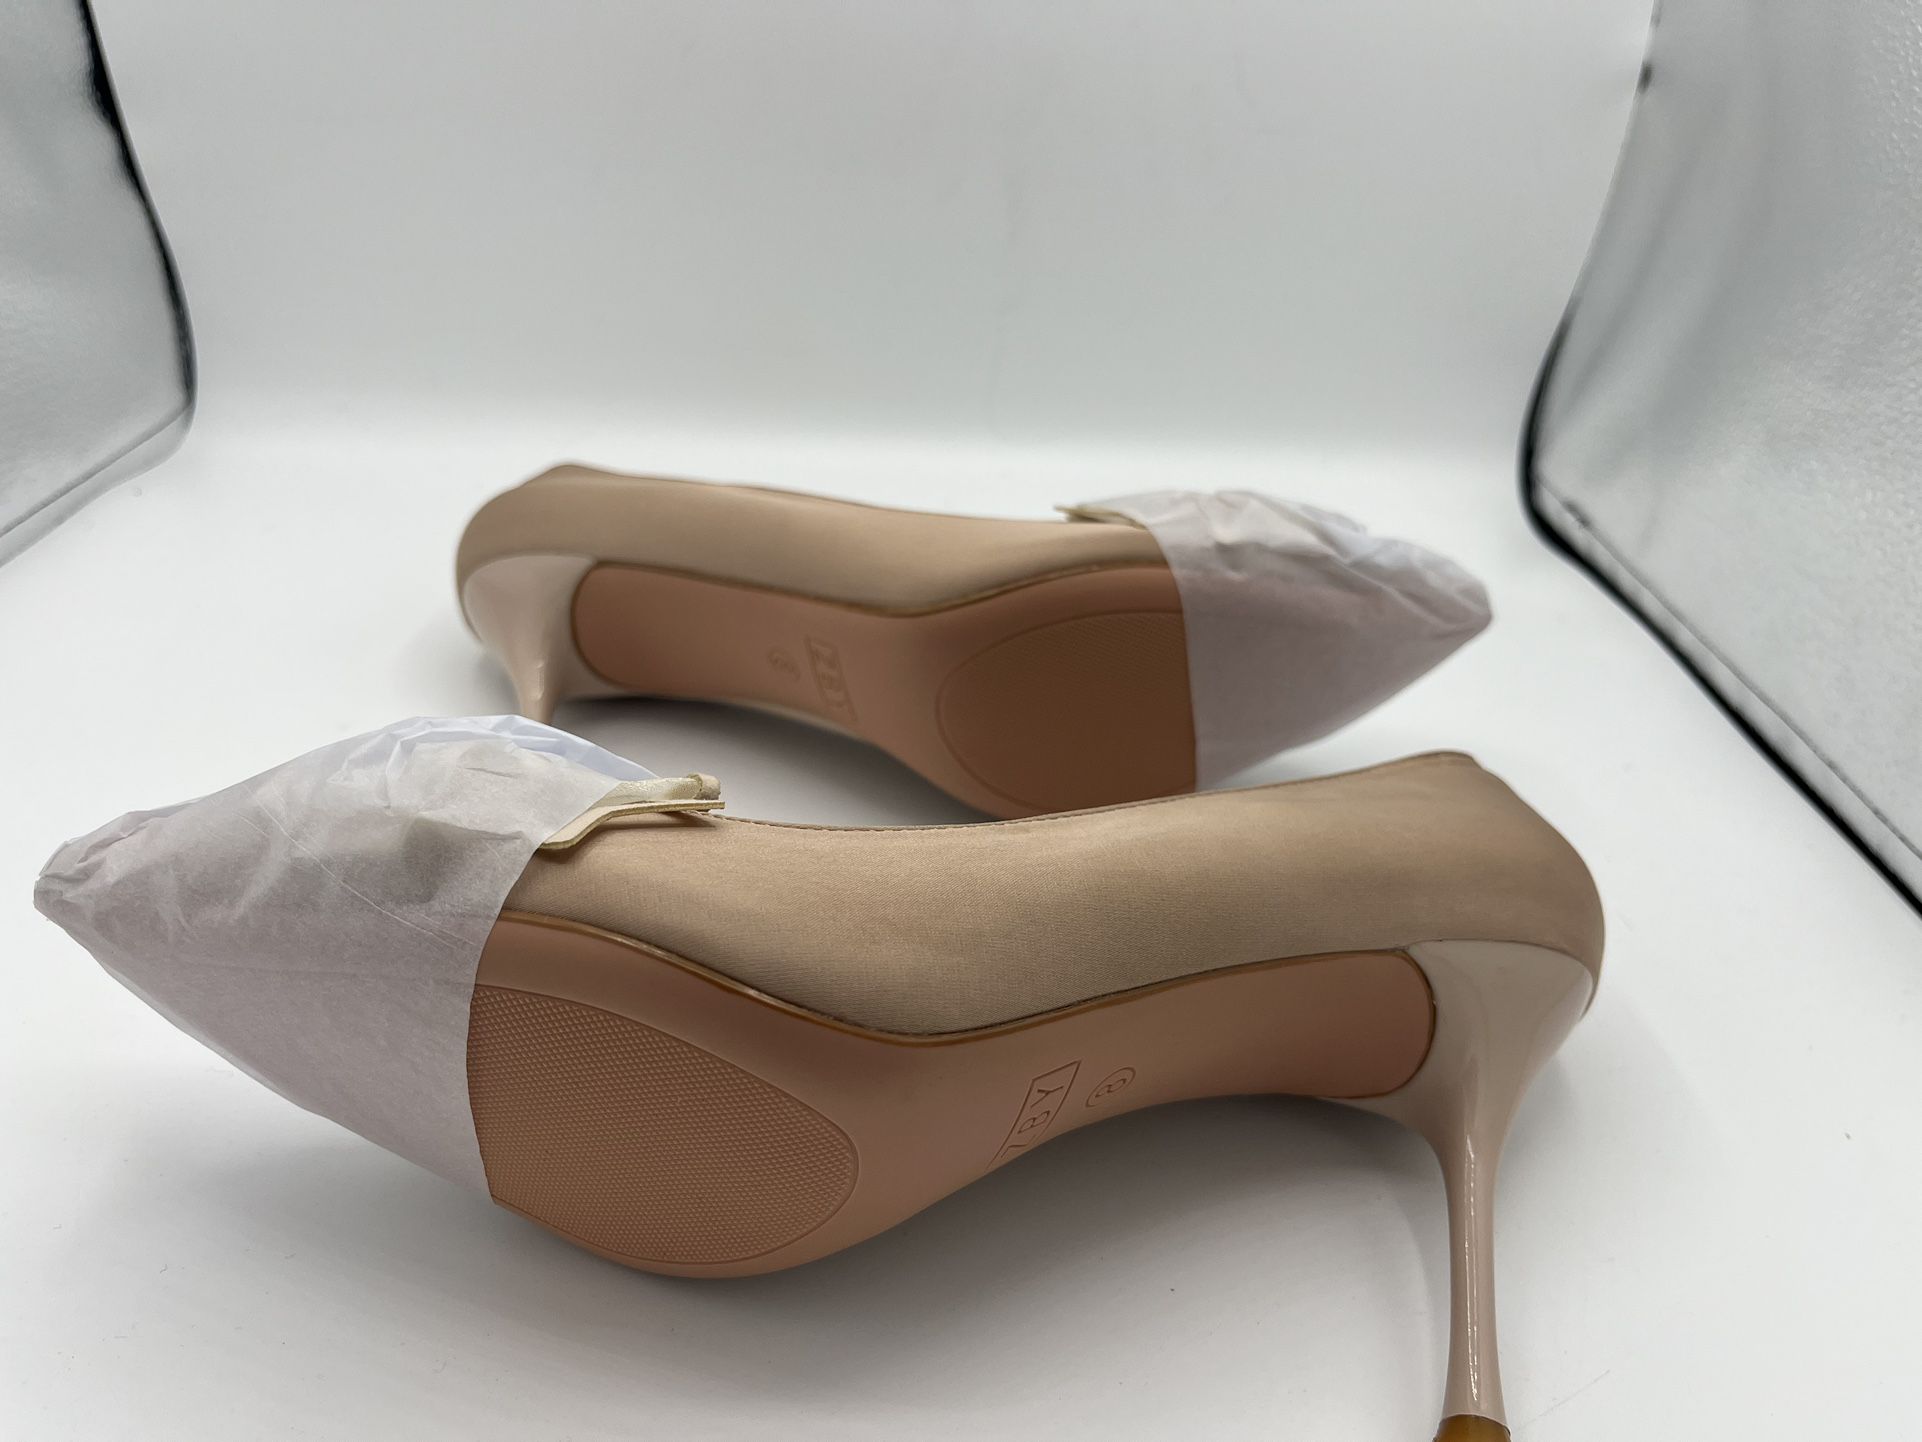 Coutgo Women's Pointed Toe Stiletto Satin Shoes Khaki Color Size 8